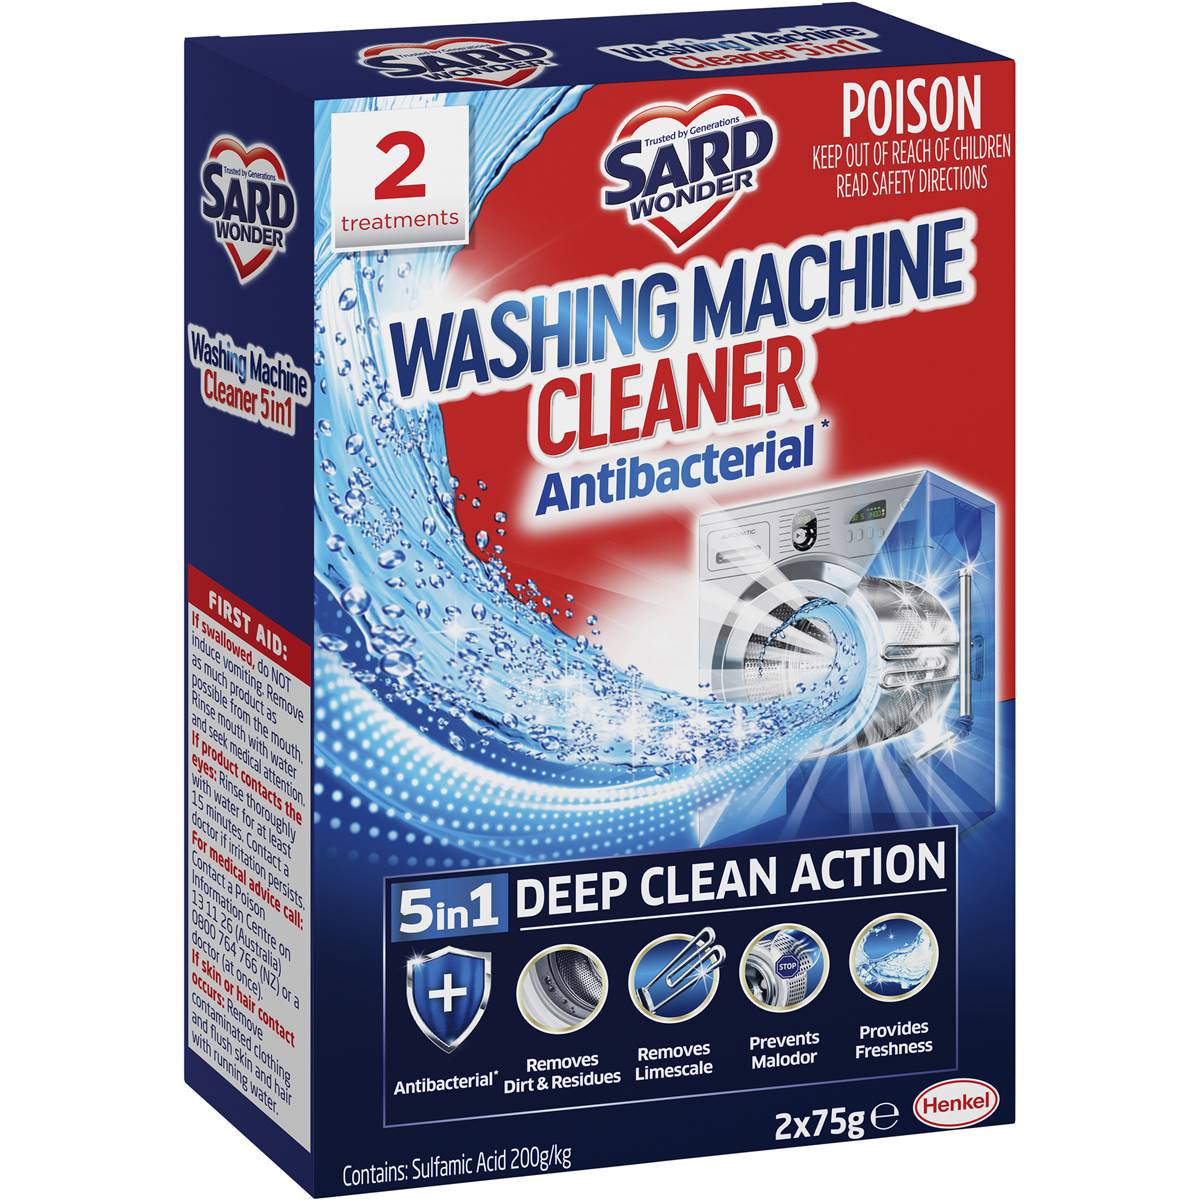 Sard Washing Machine Cleaner Antibacterial Disinfectant 2 Pack